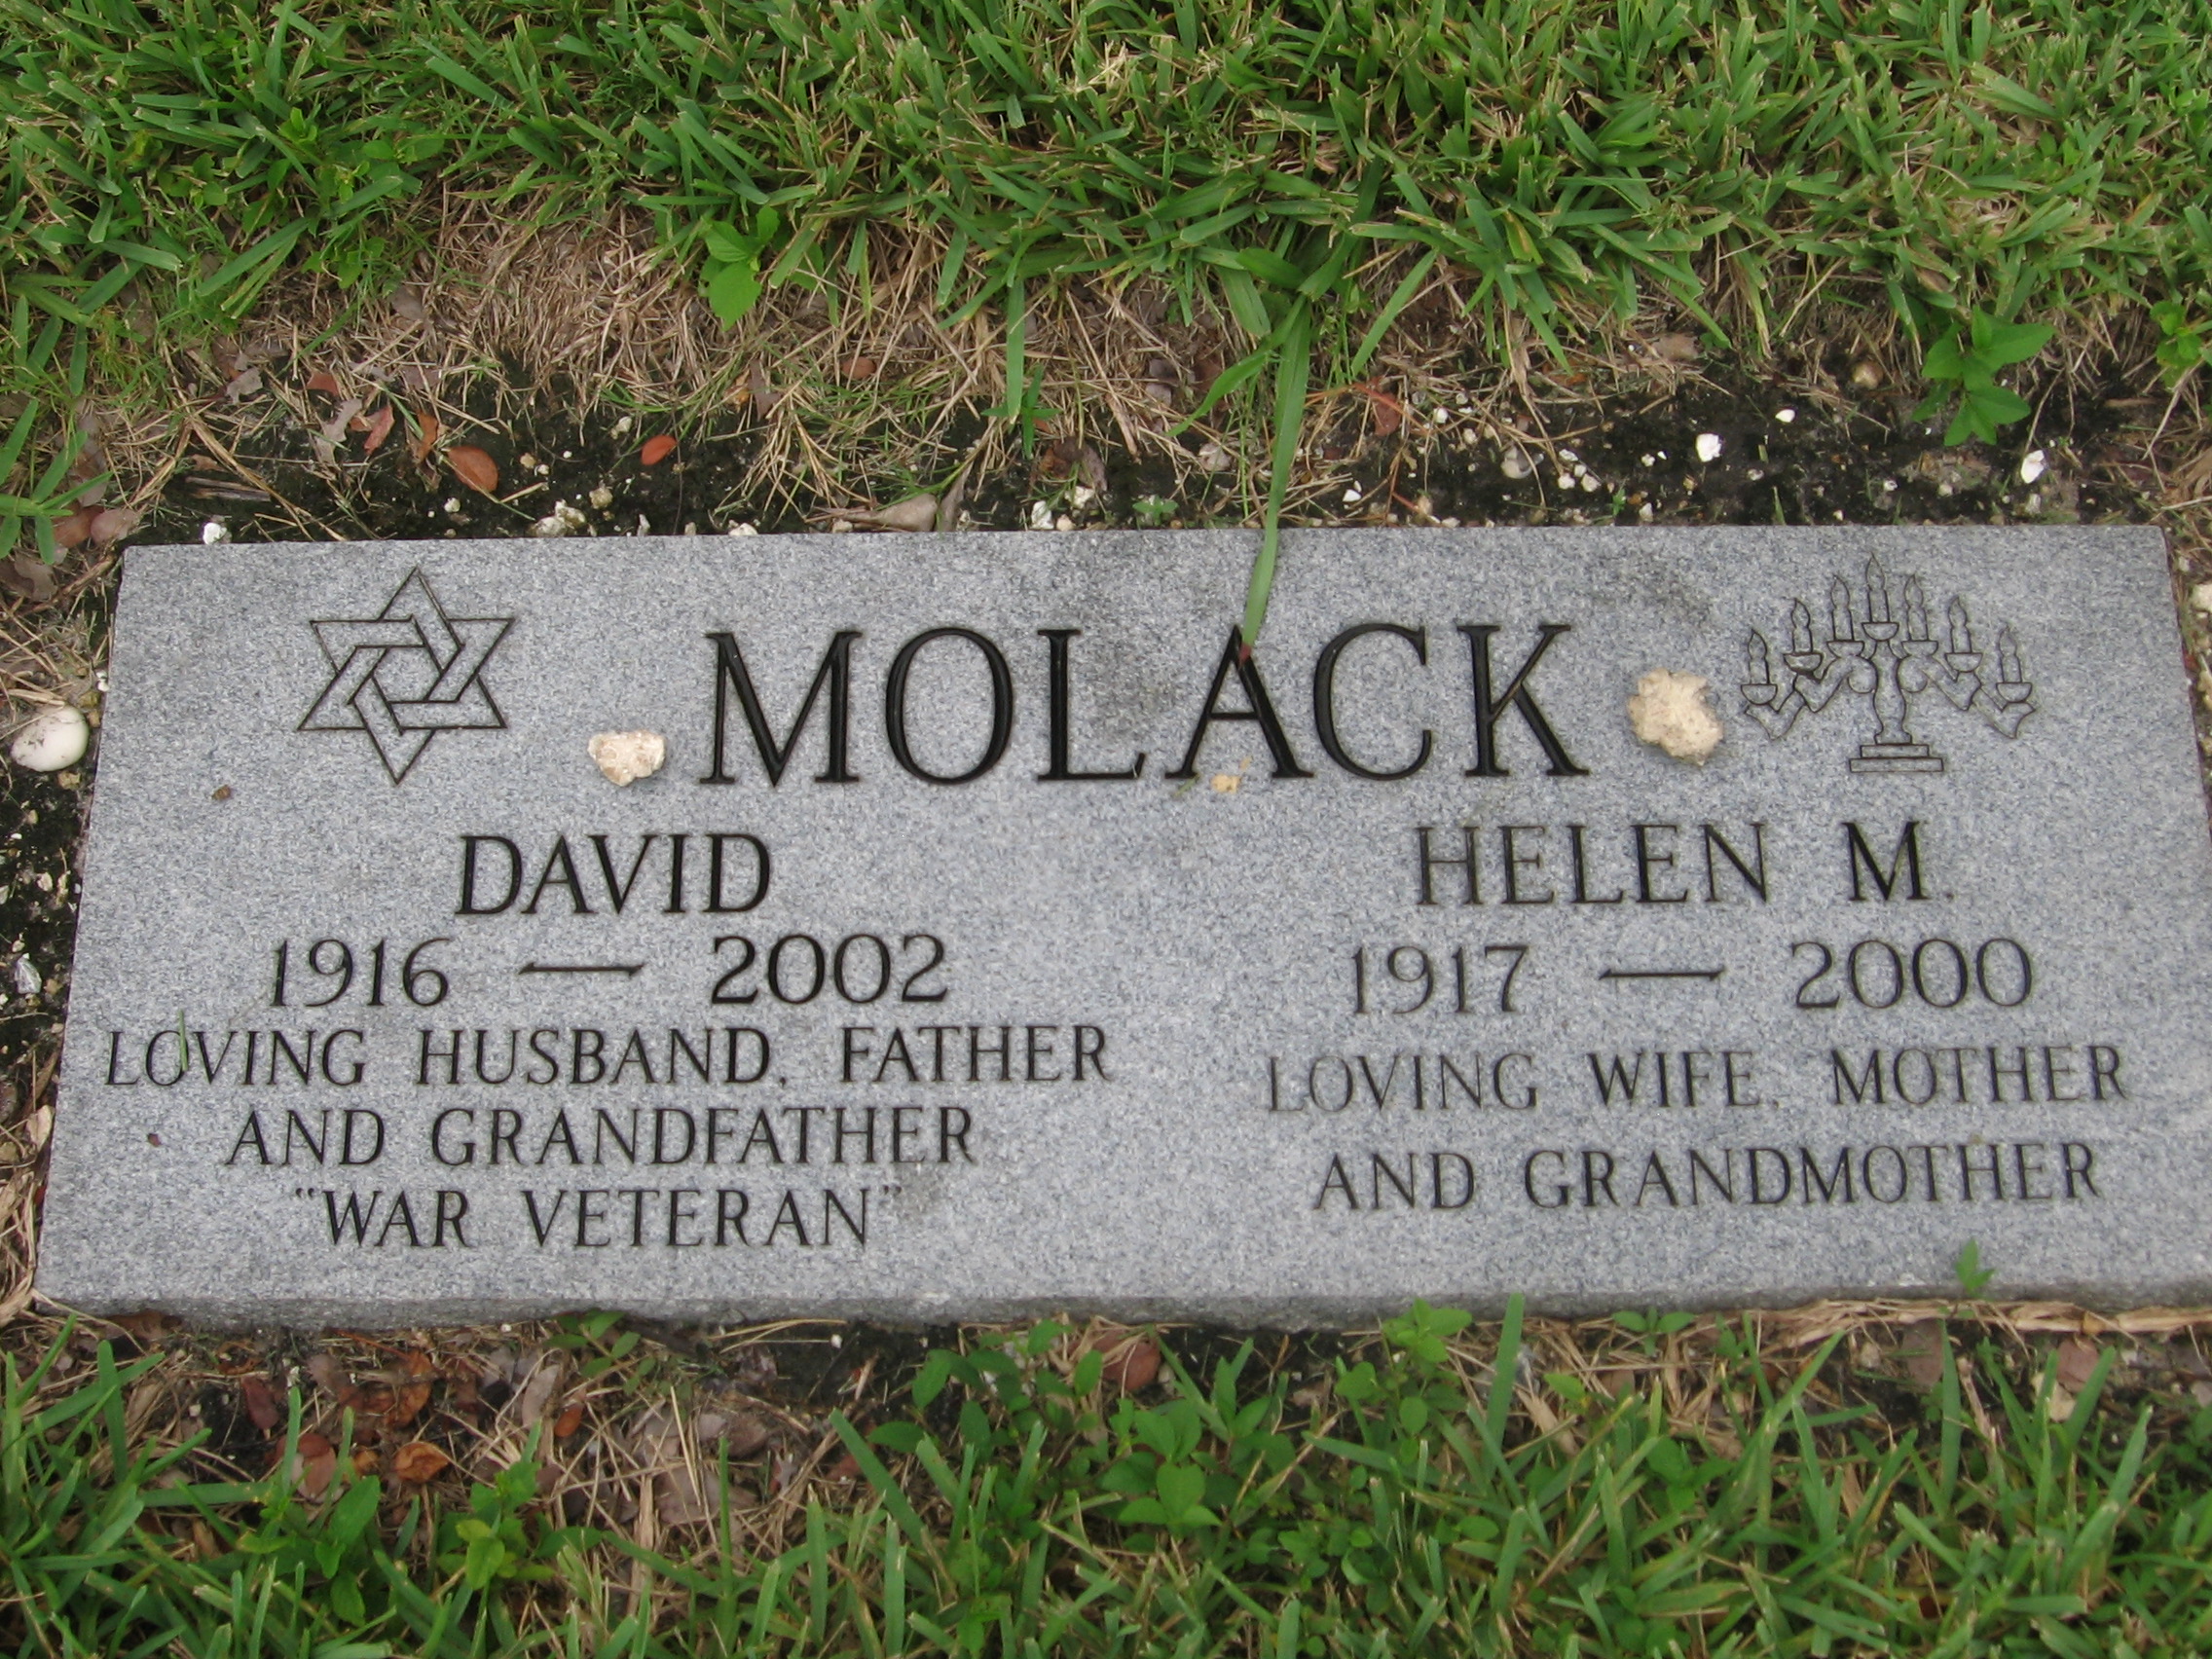 David Molack